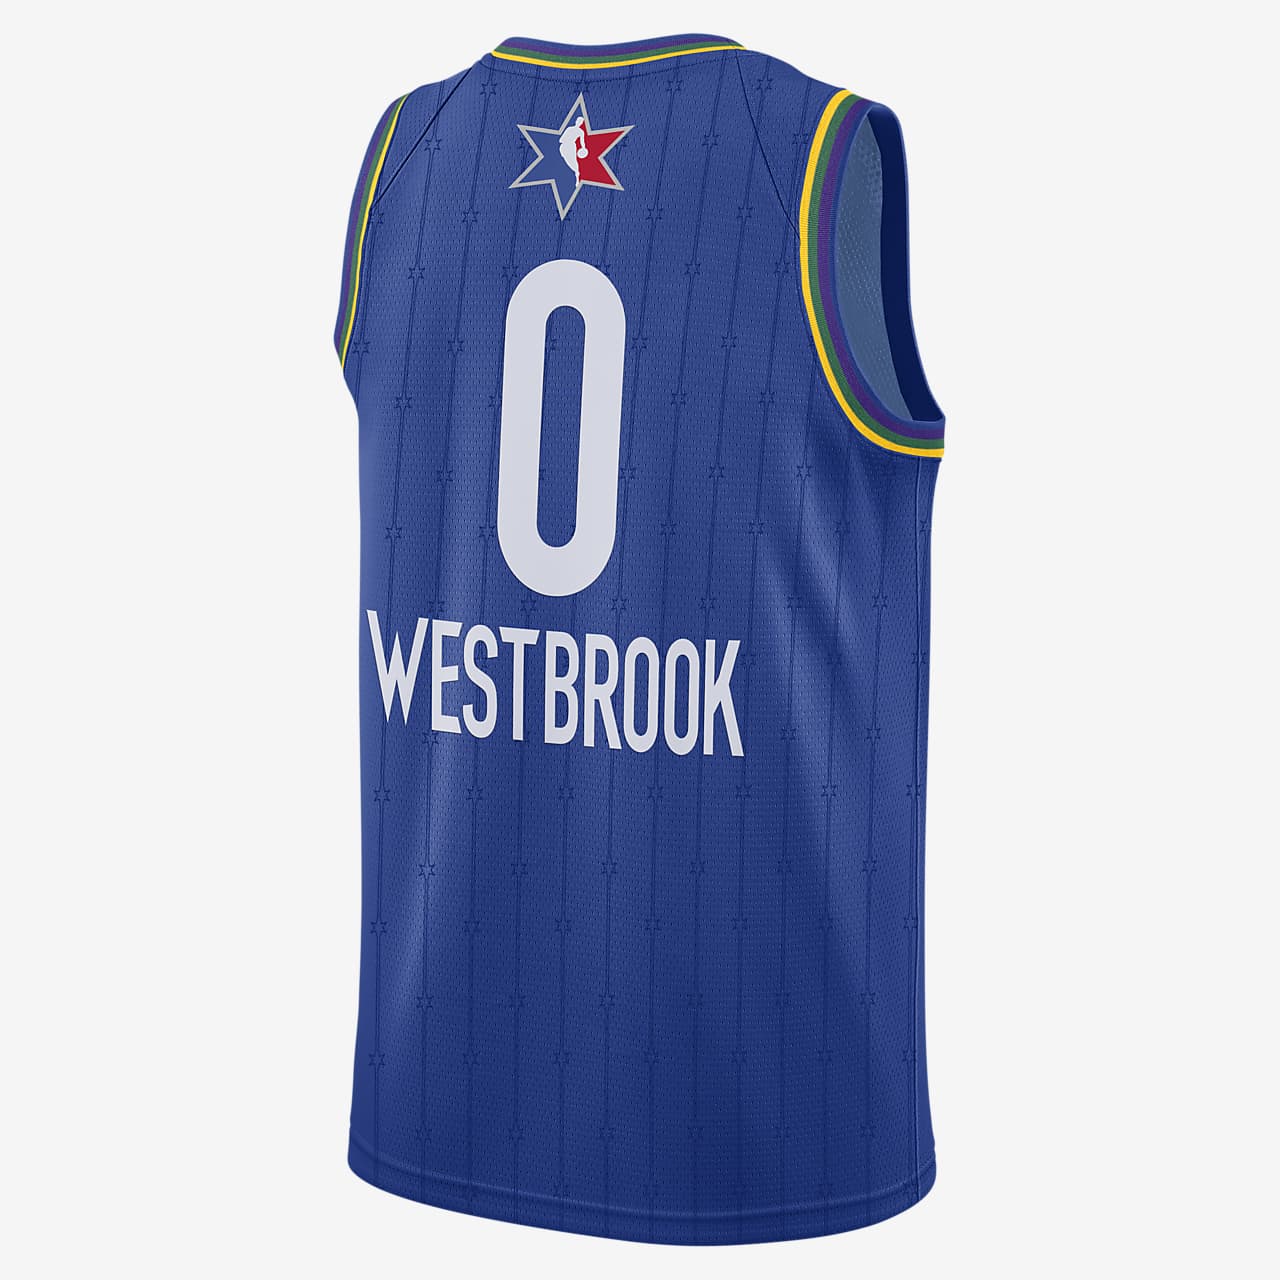 westbrook jordan jersey